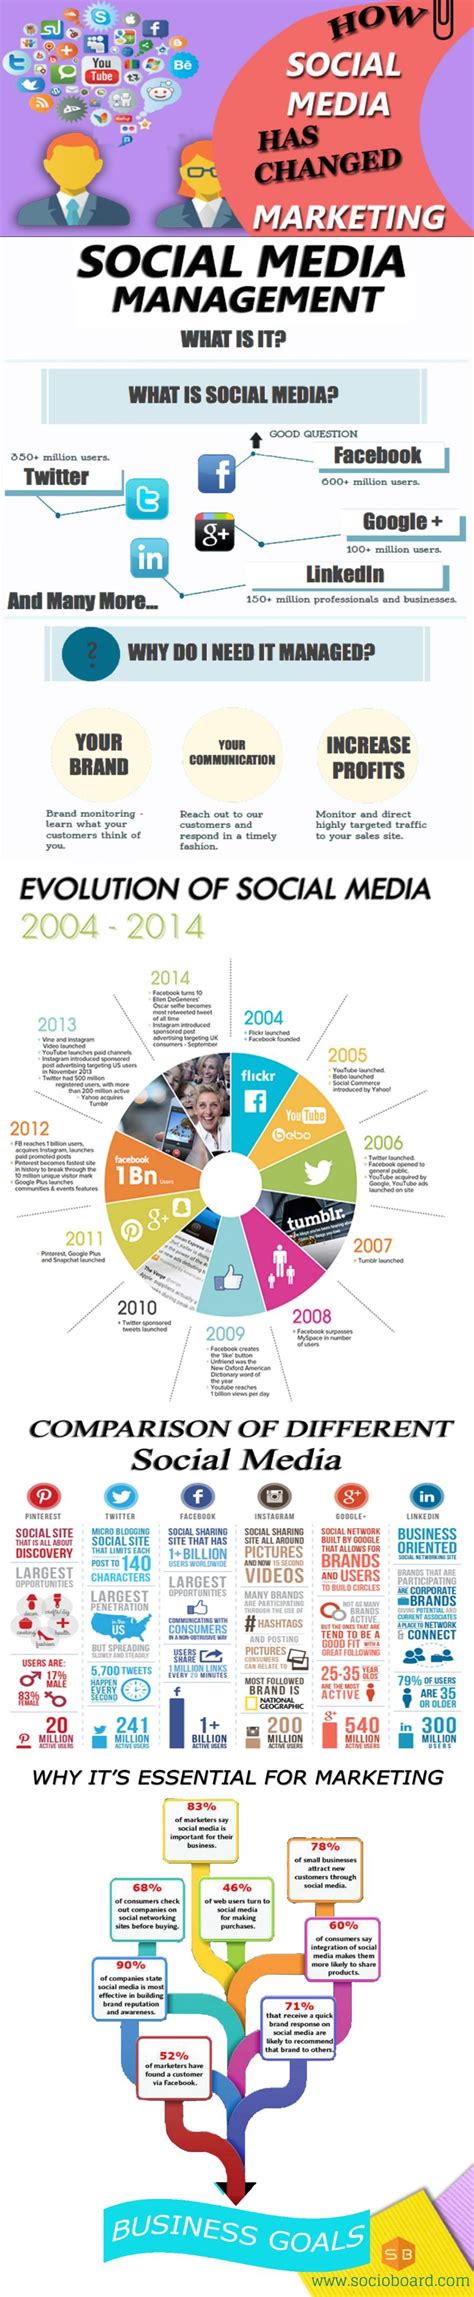 How Social Media Has Changed Marketing | Visual.ly | Social media, What is social, Free social media